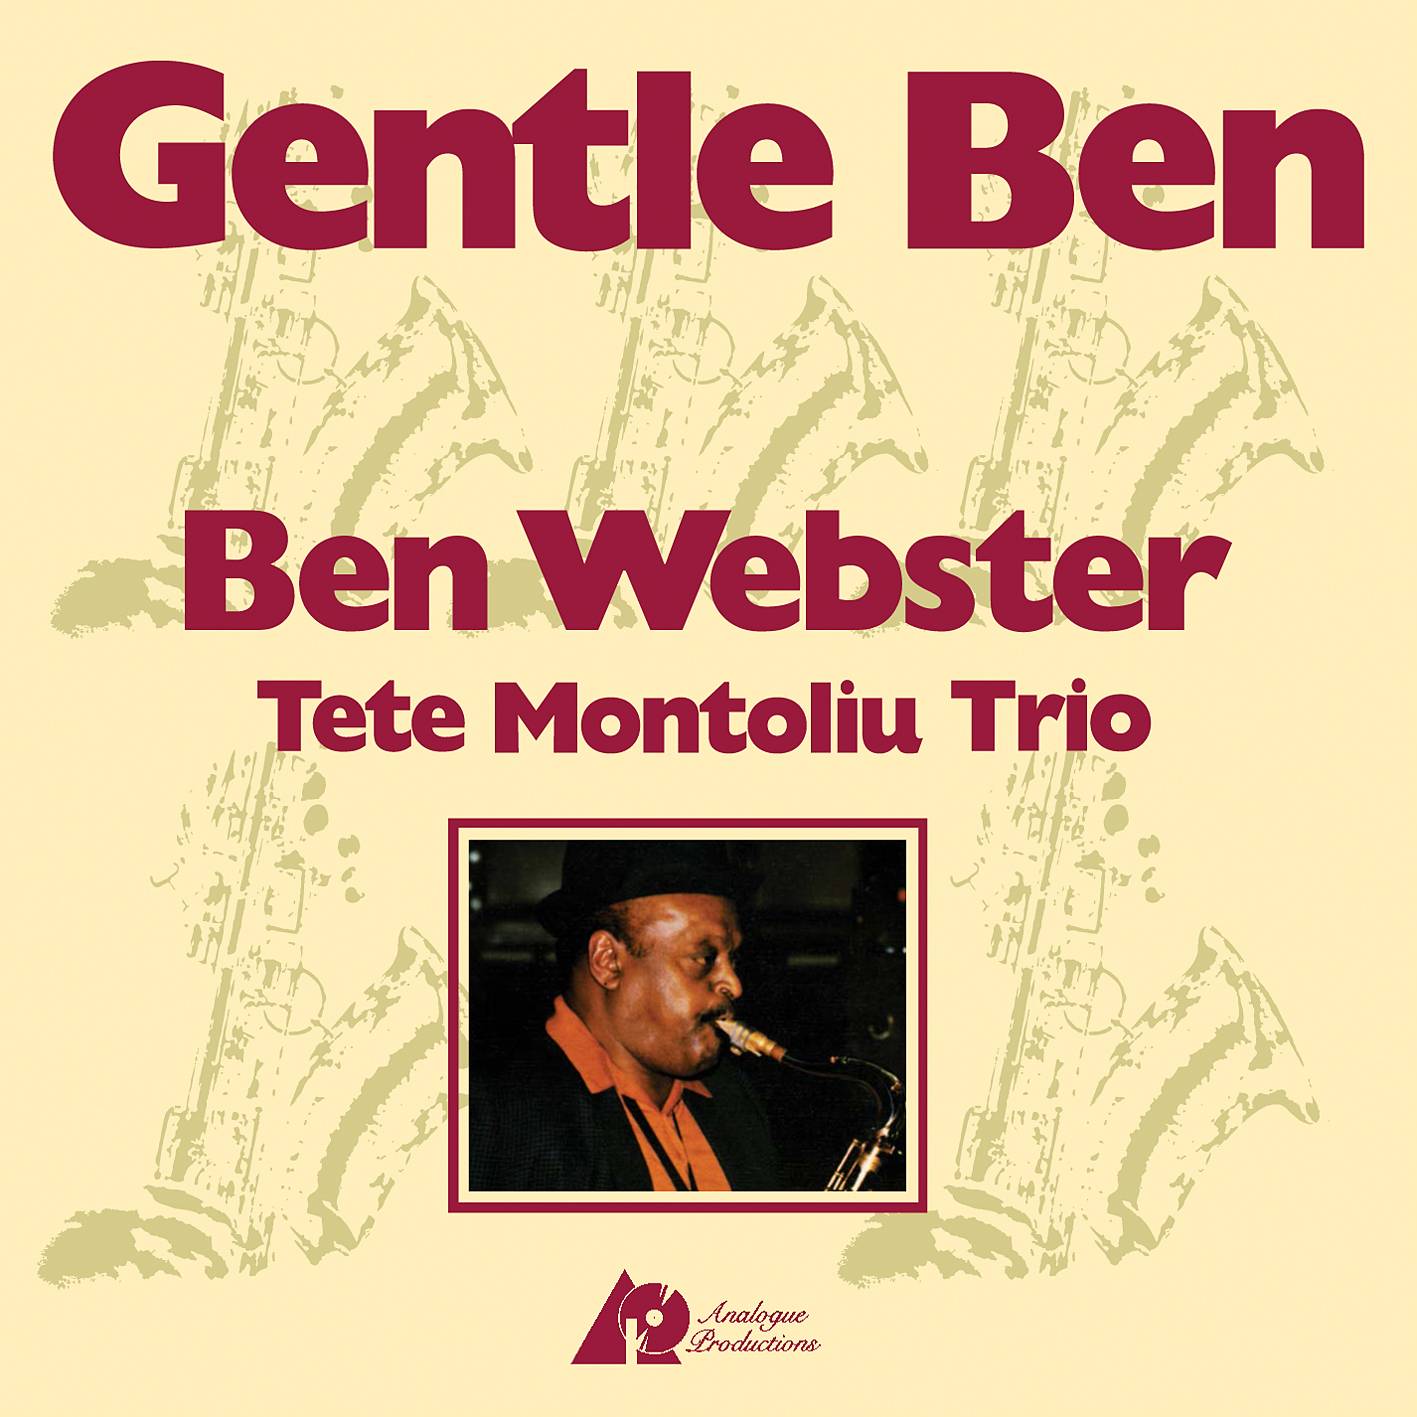 Ben Webster & Tete Montoliu Trio – Gentle Ben (1972) [Analogue Productions 2011] SACD ISO + Hi-Res FLAC